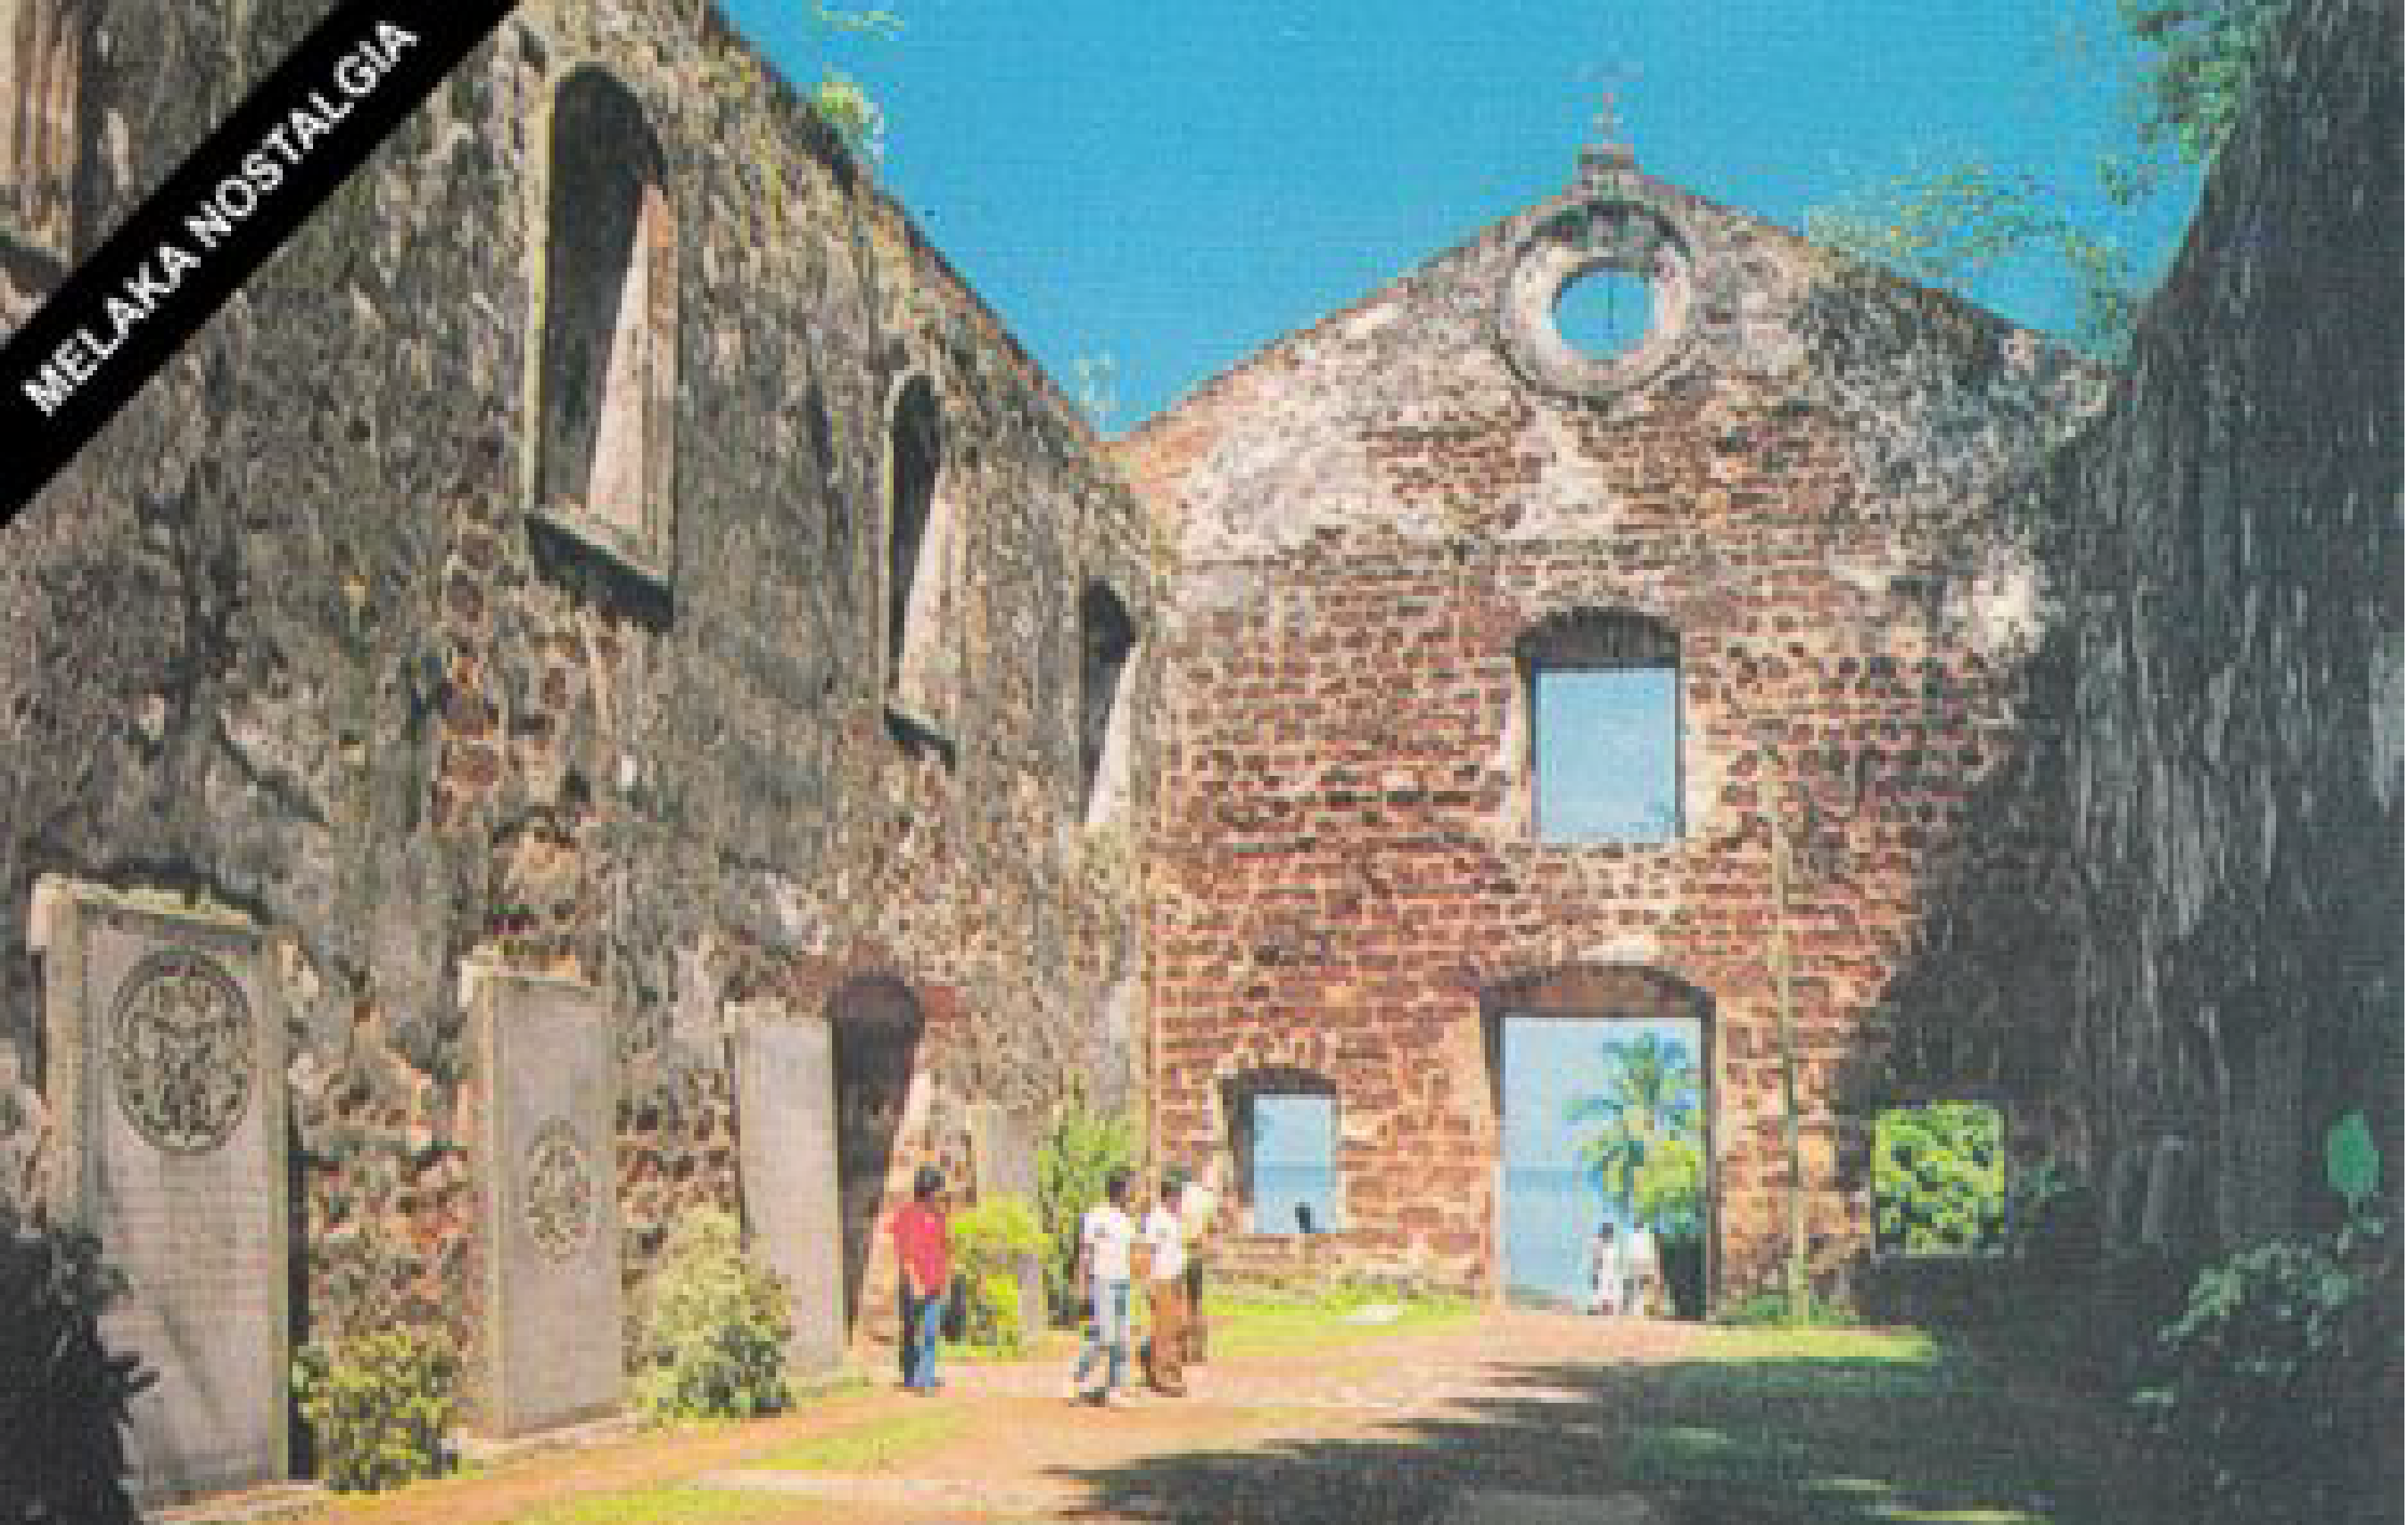 The ruins of St. Paul's Church circa 1960 (source: Melaka Nostalgia)